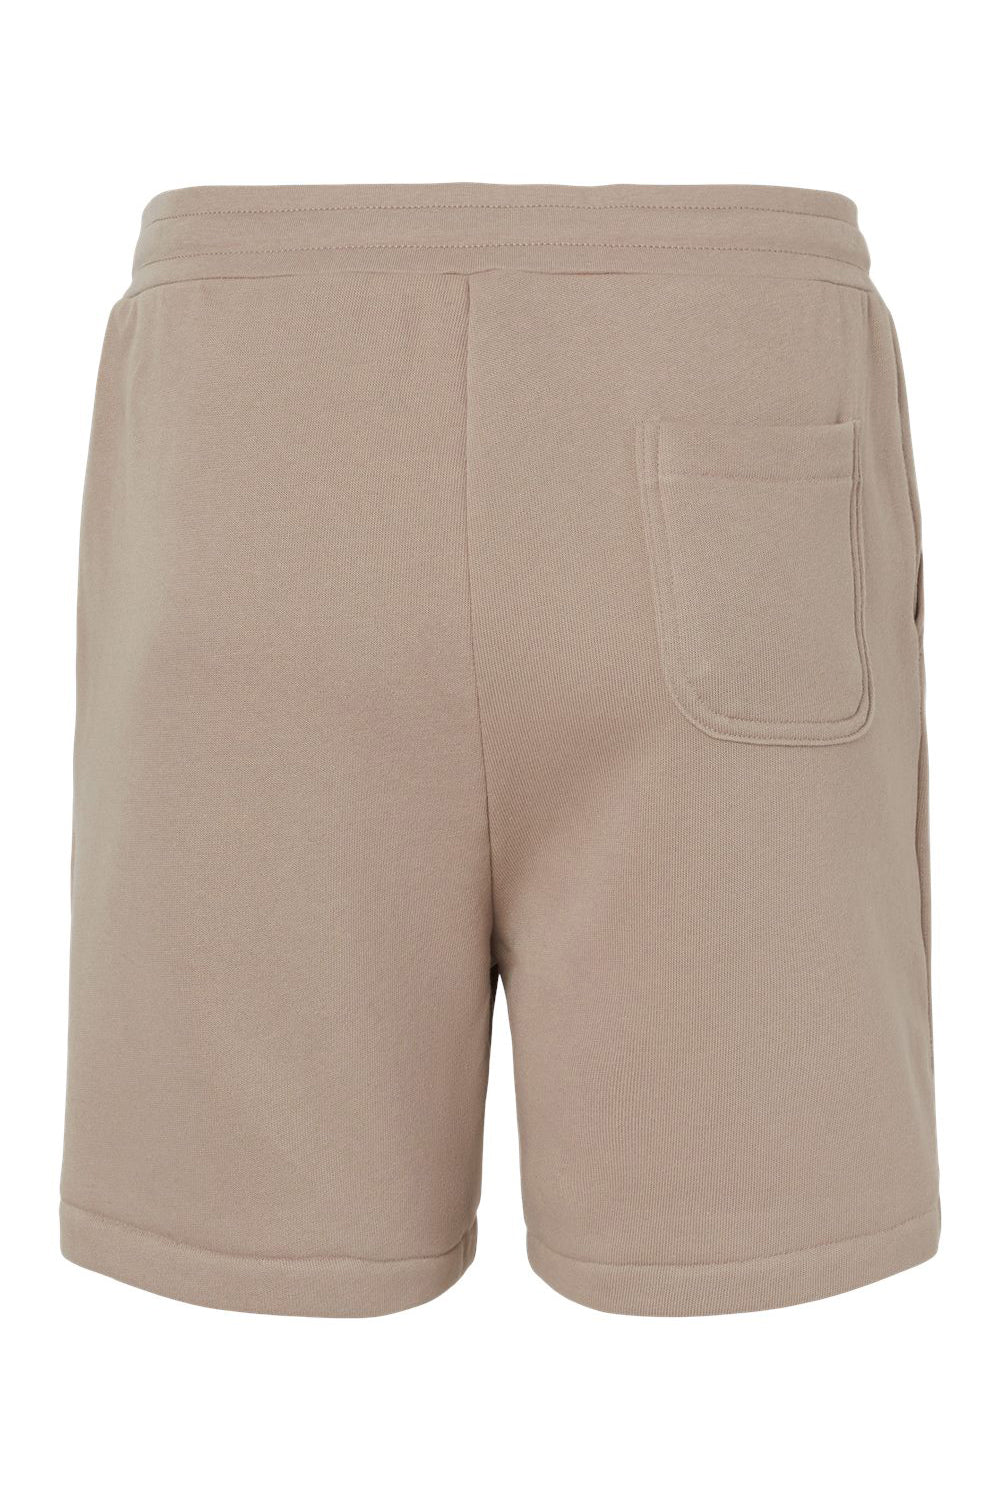 Bella + Canvas 3724 Mens Shorts w/ Pockets Tan Flat Back